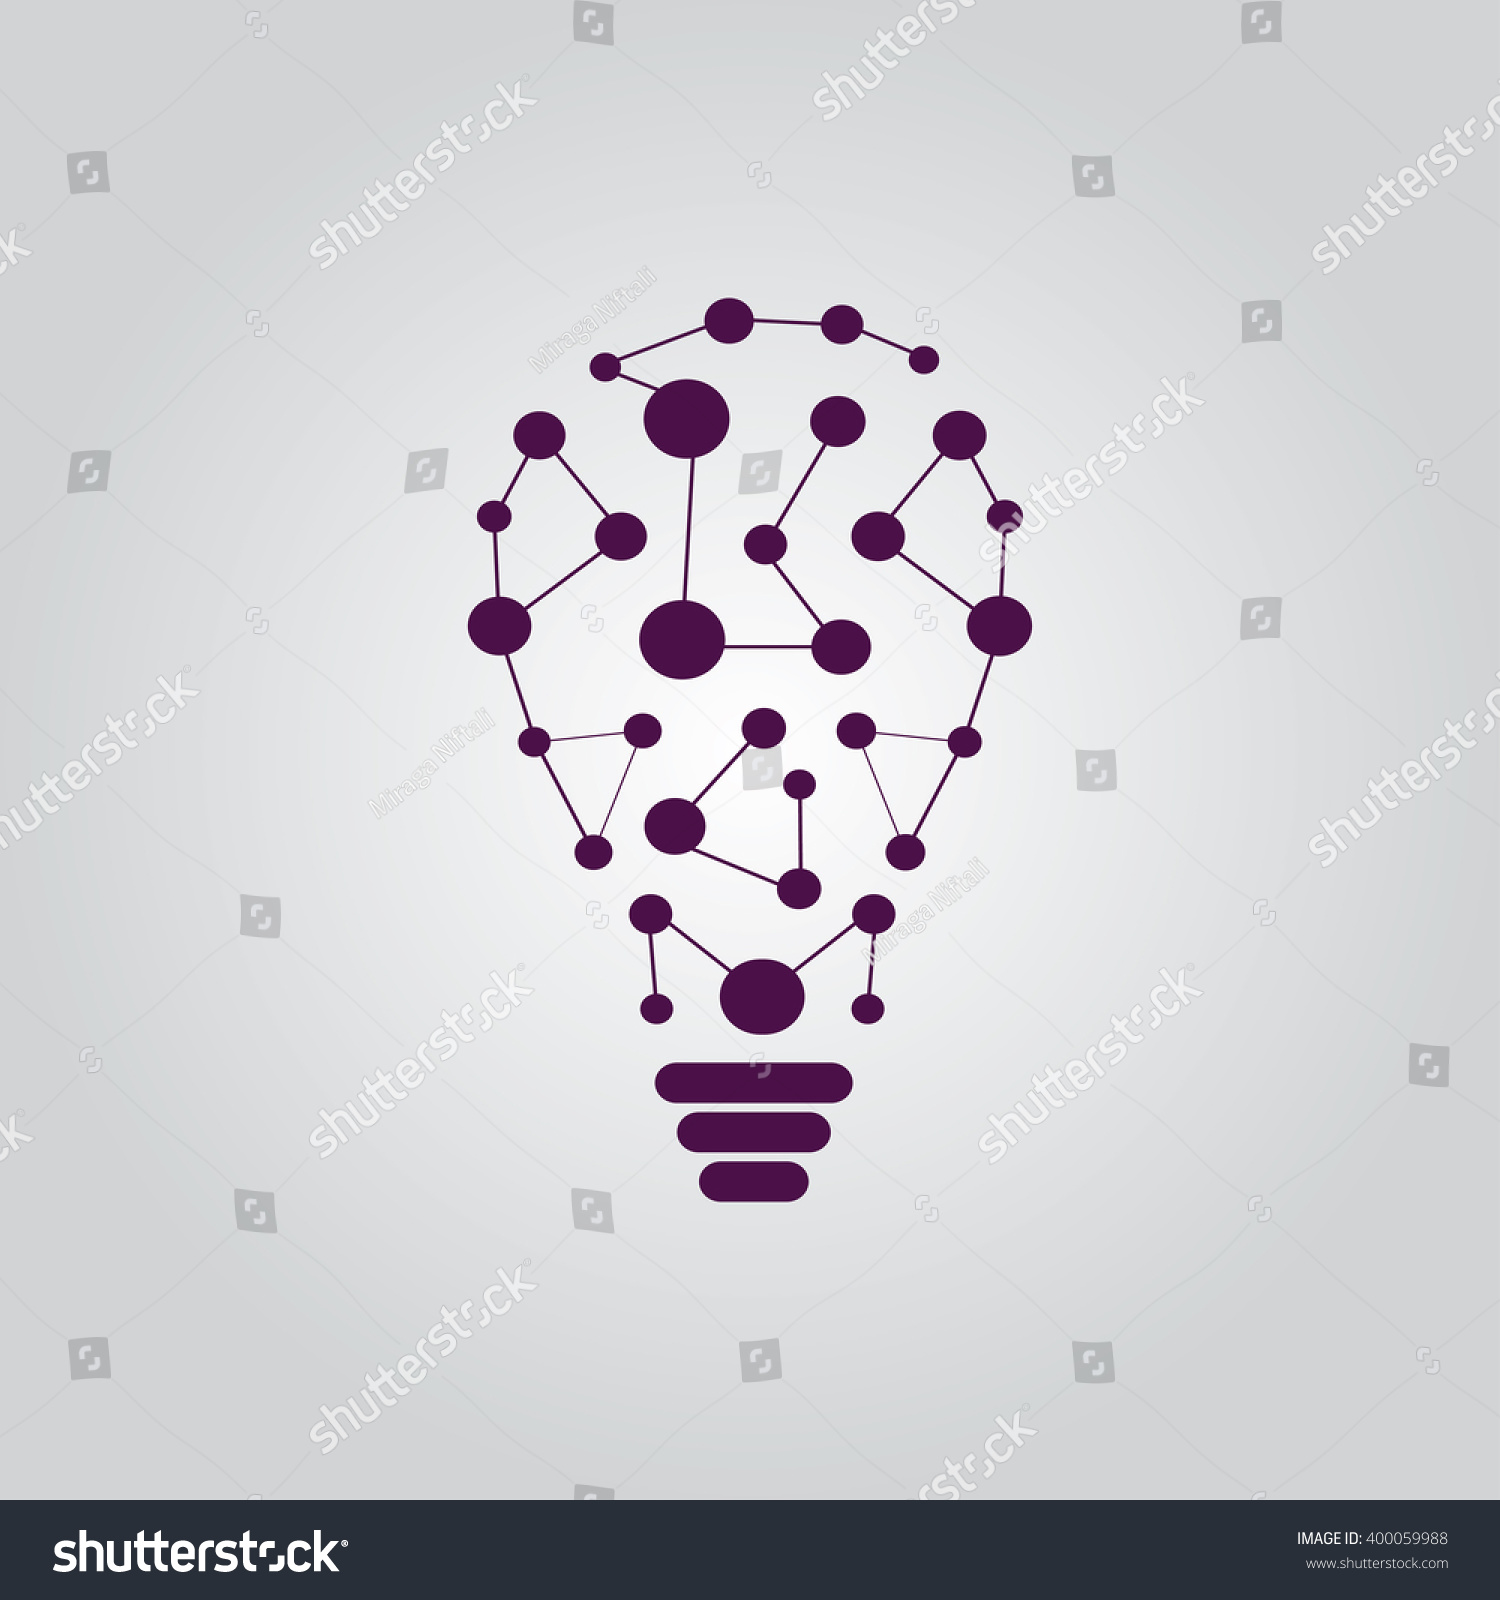 bulb connection